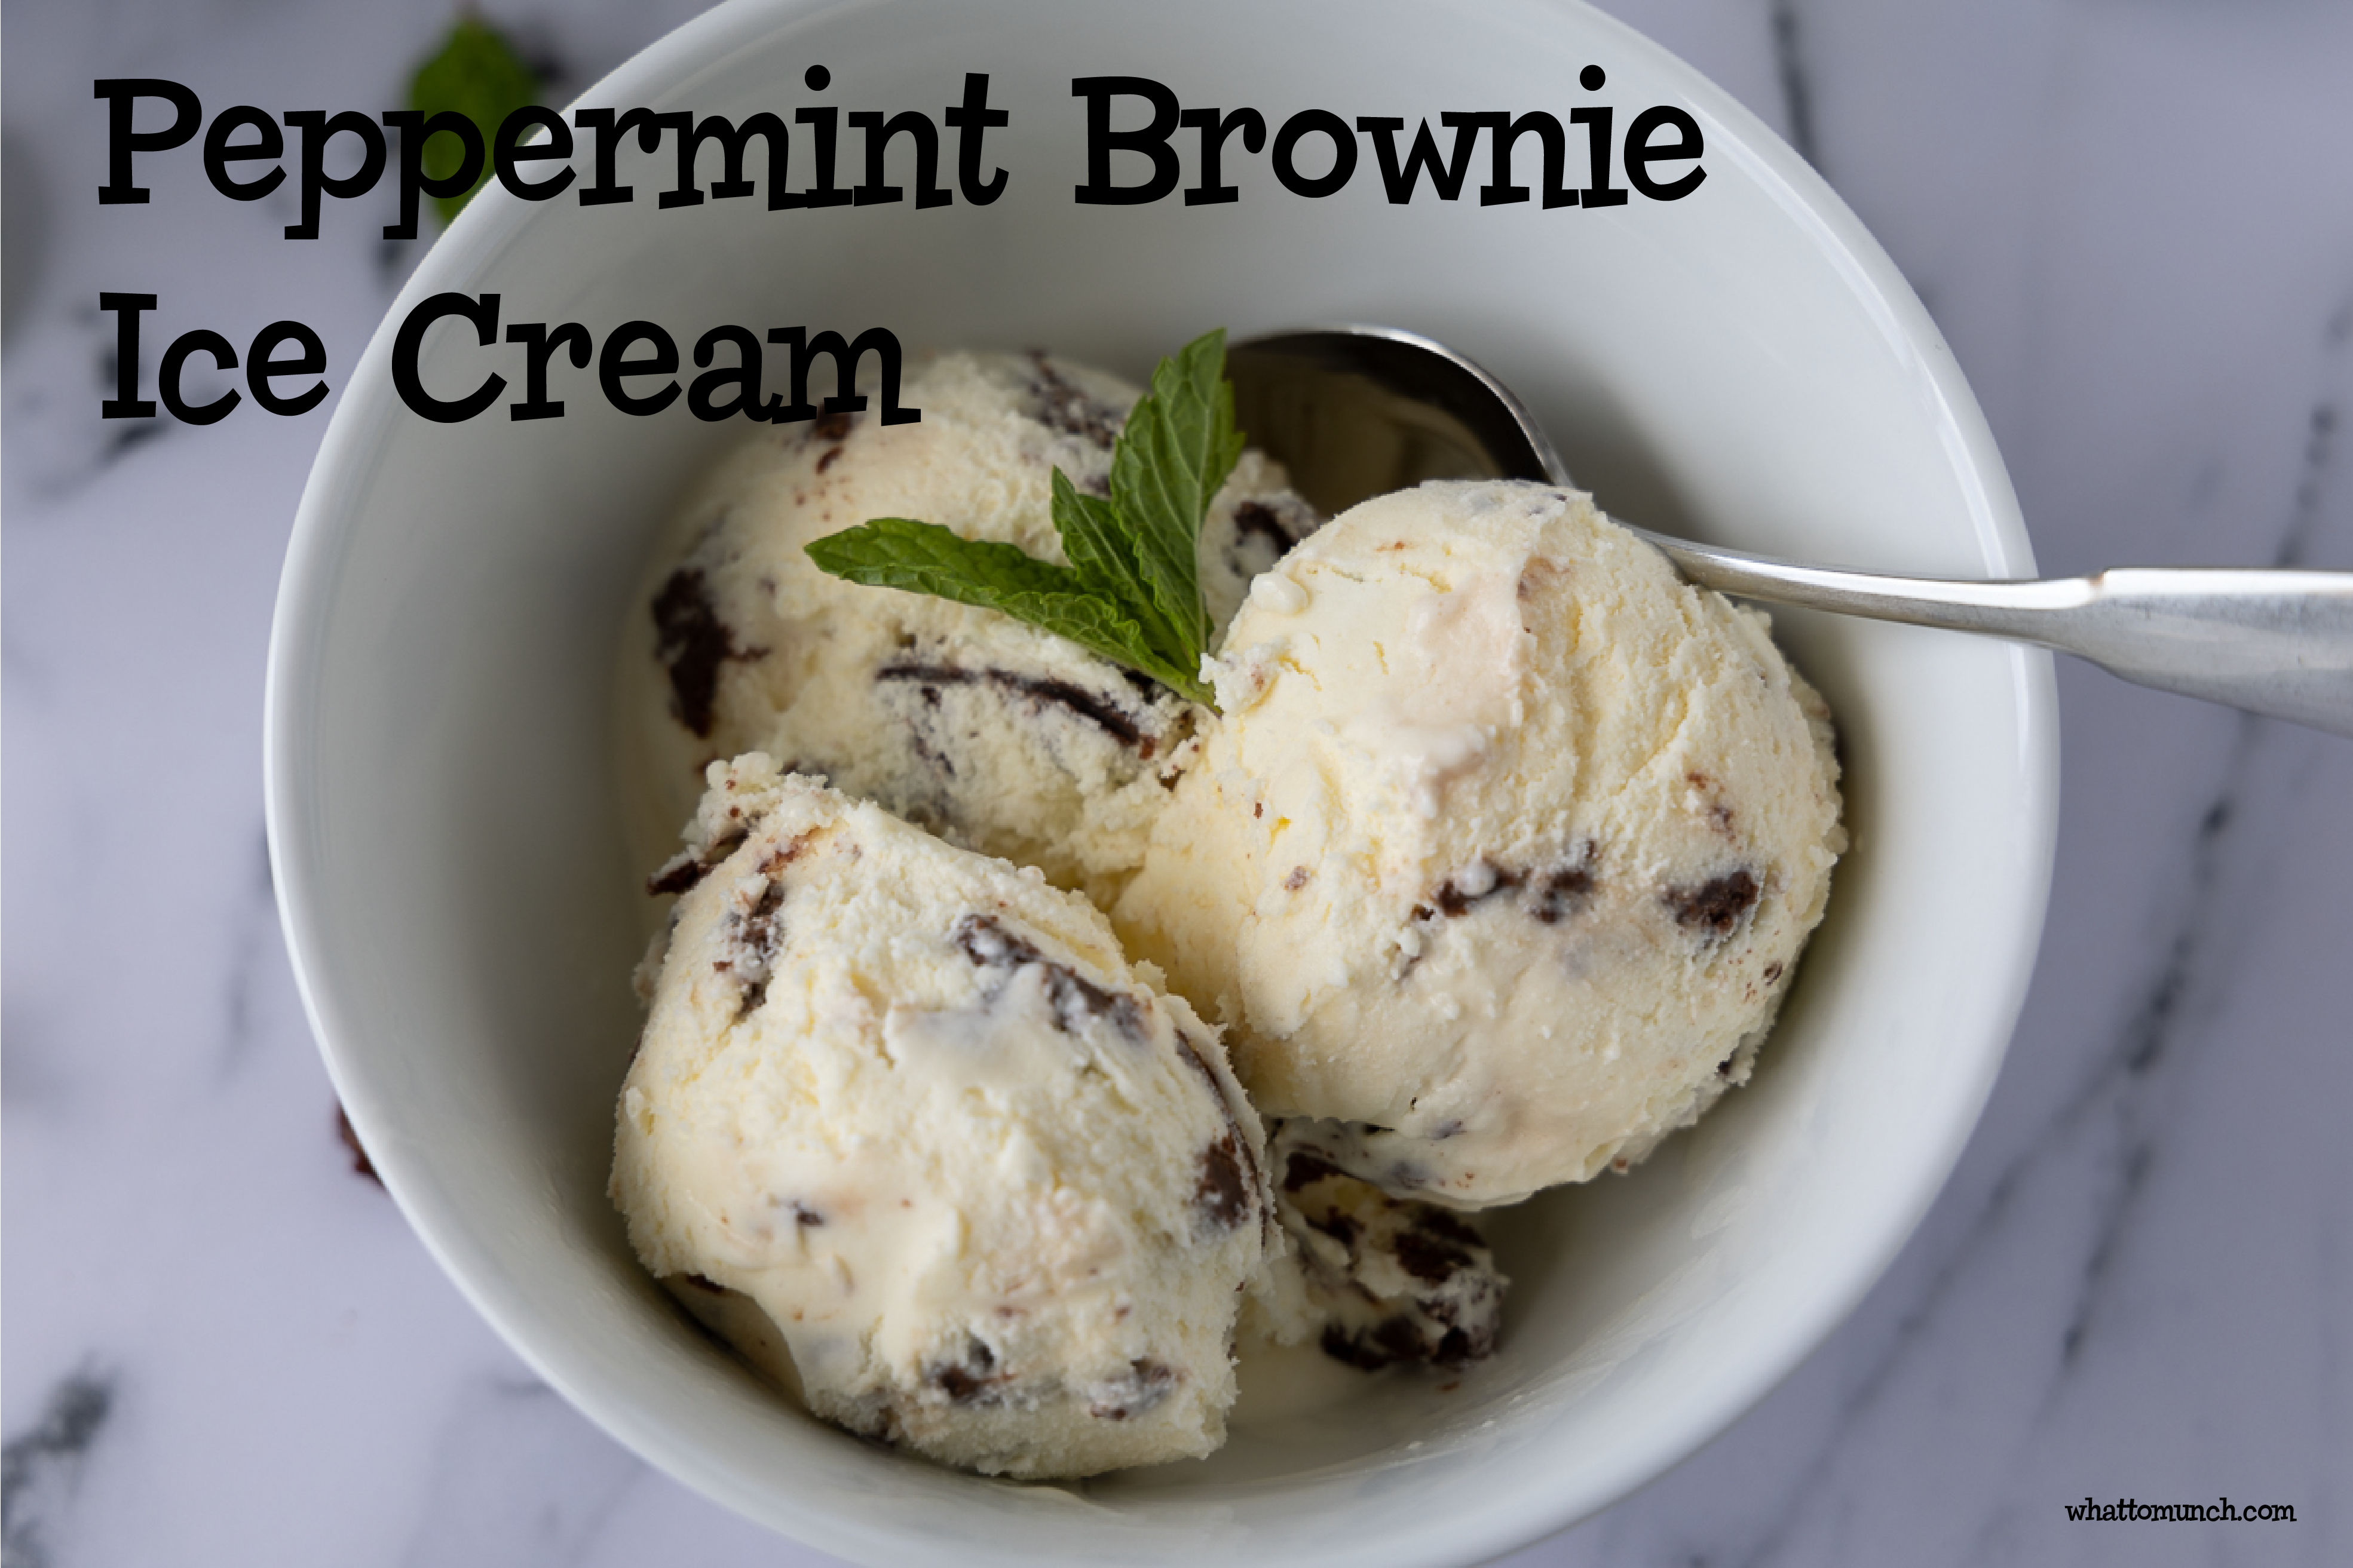 Peppermint Brownie Ice Cream